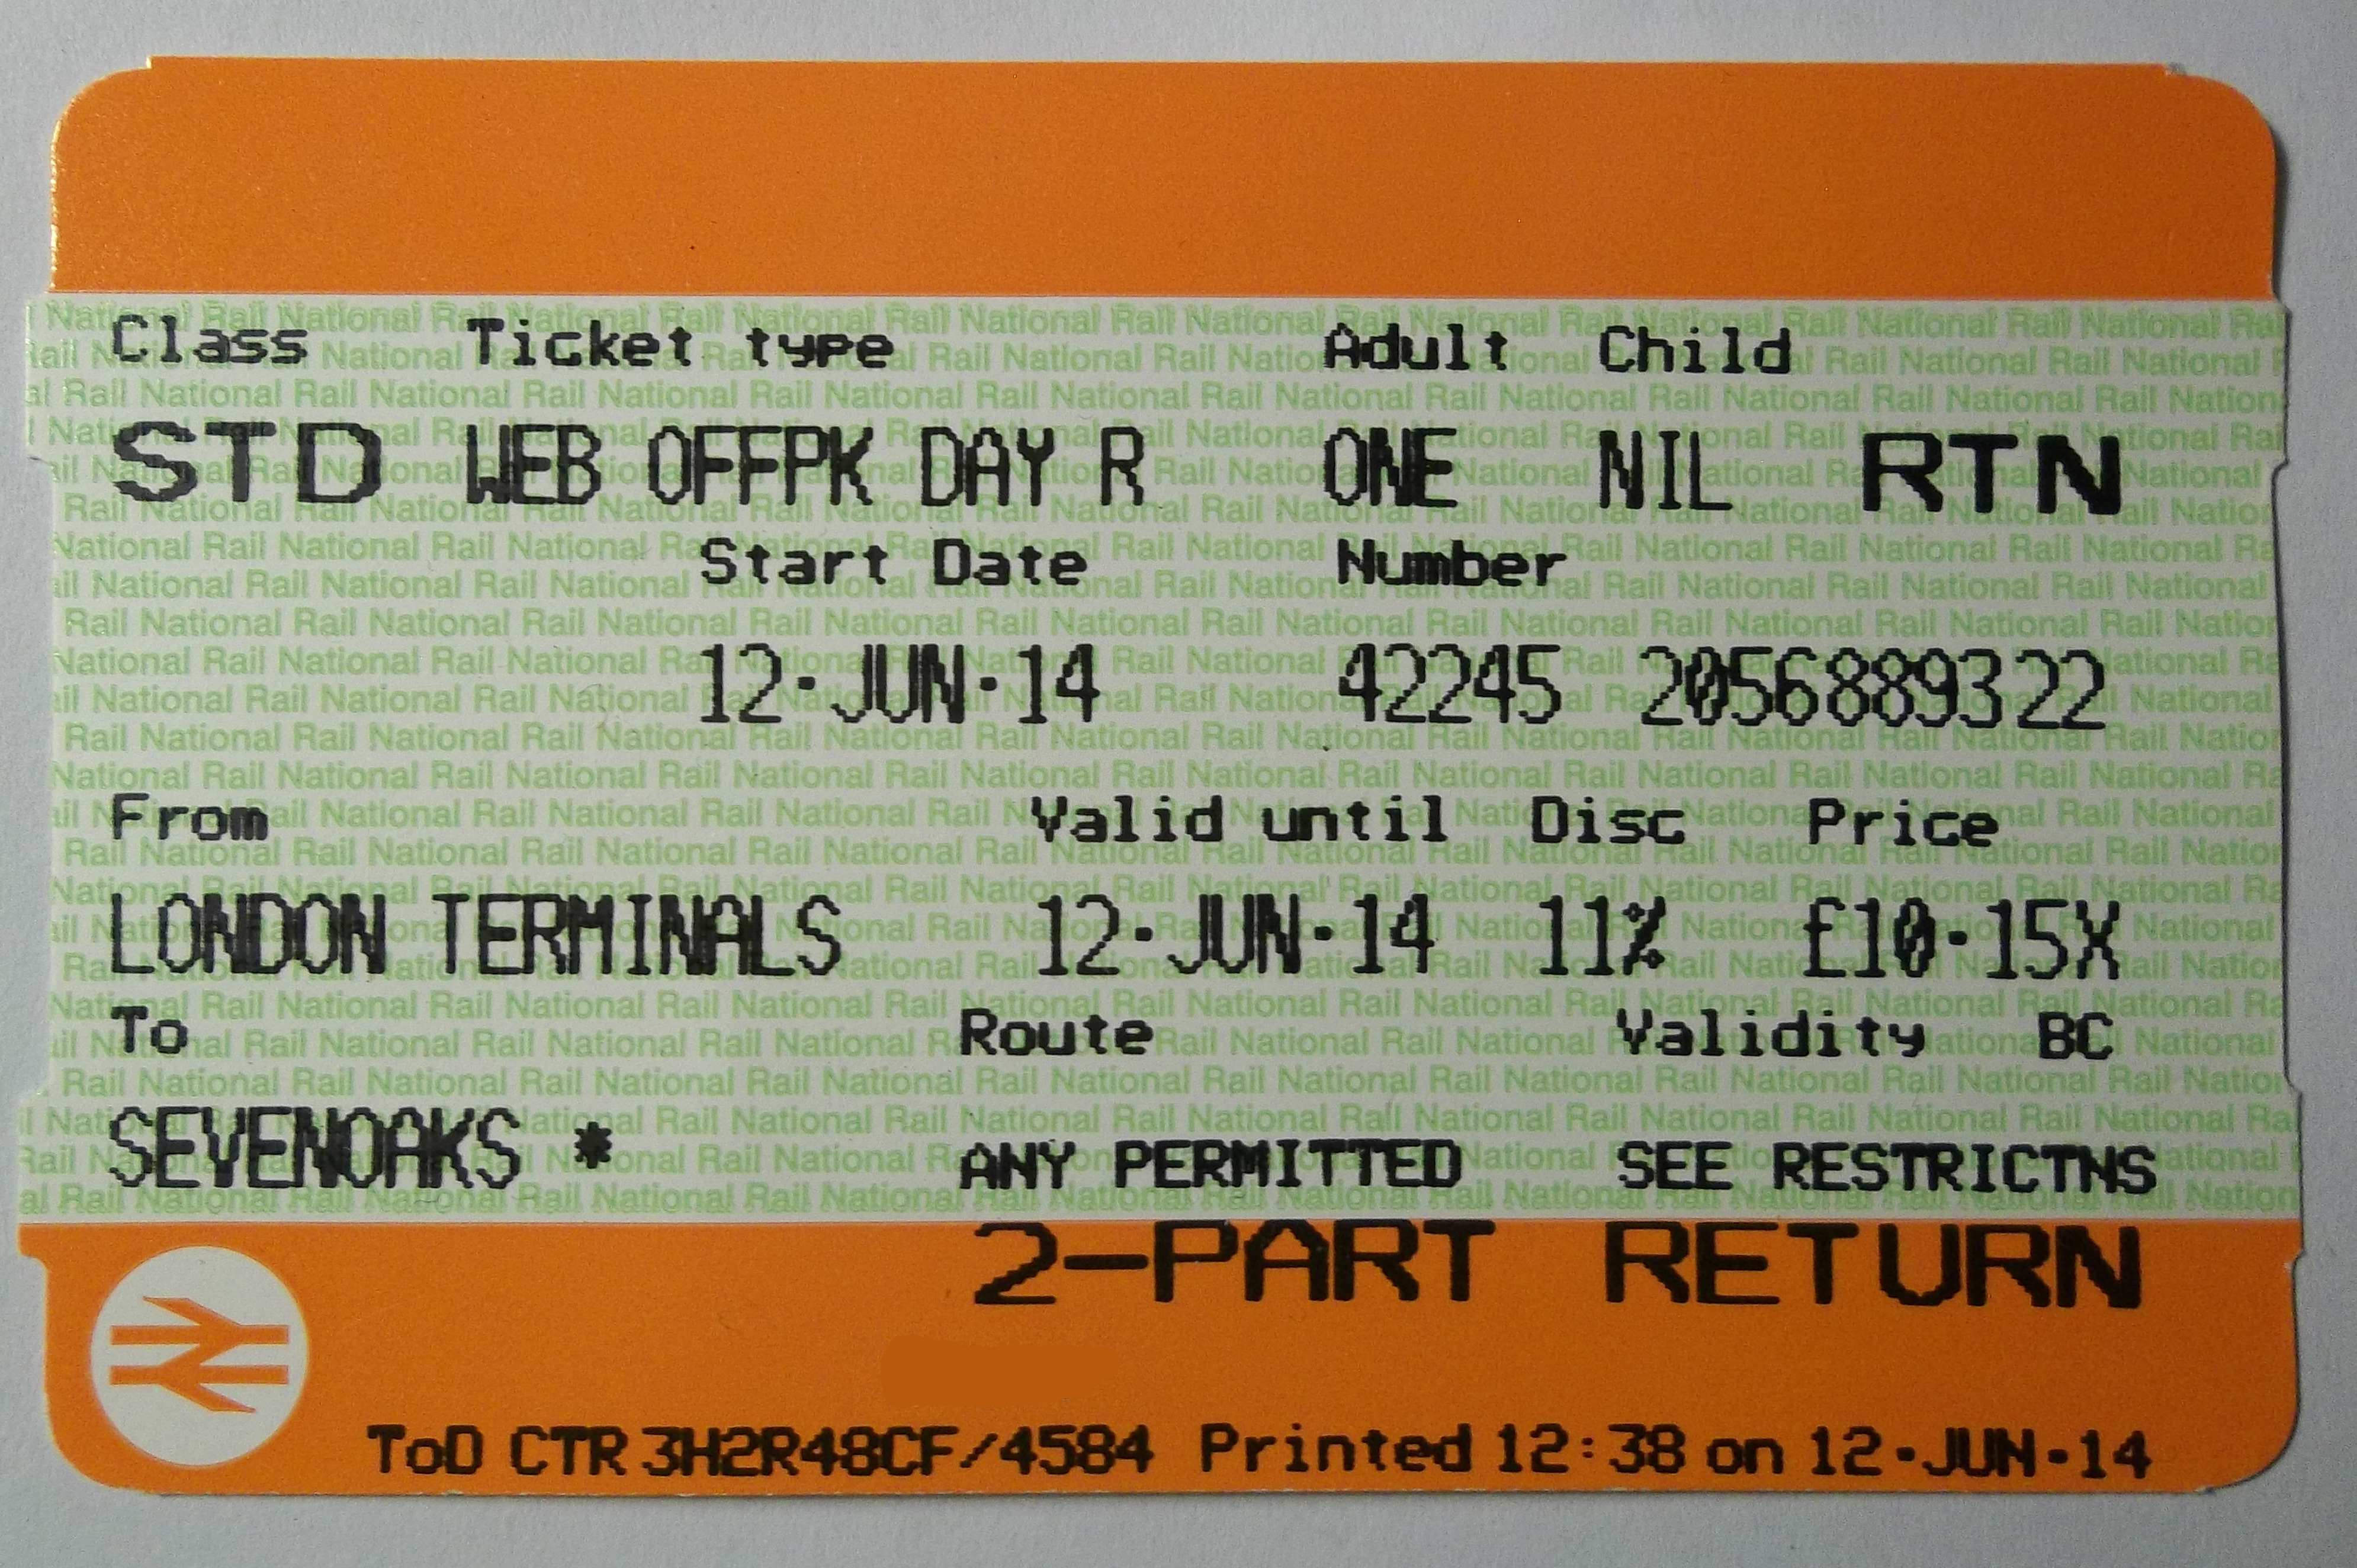 London tickets